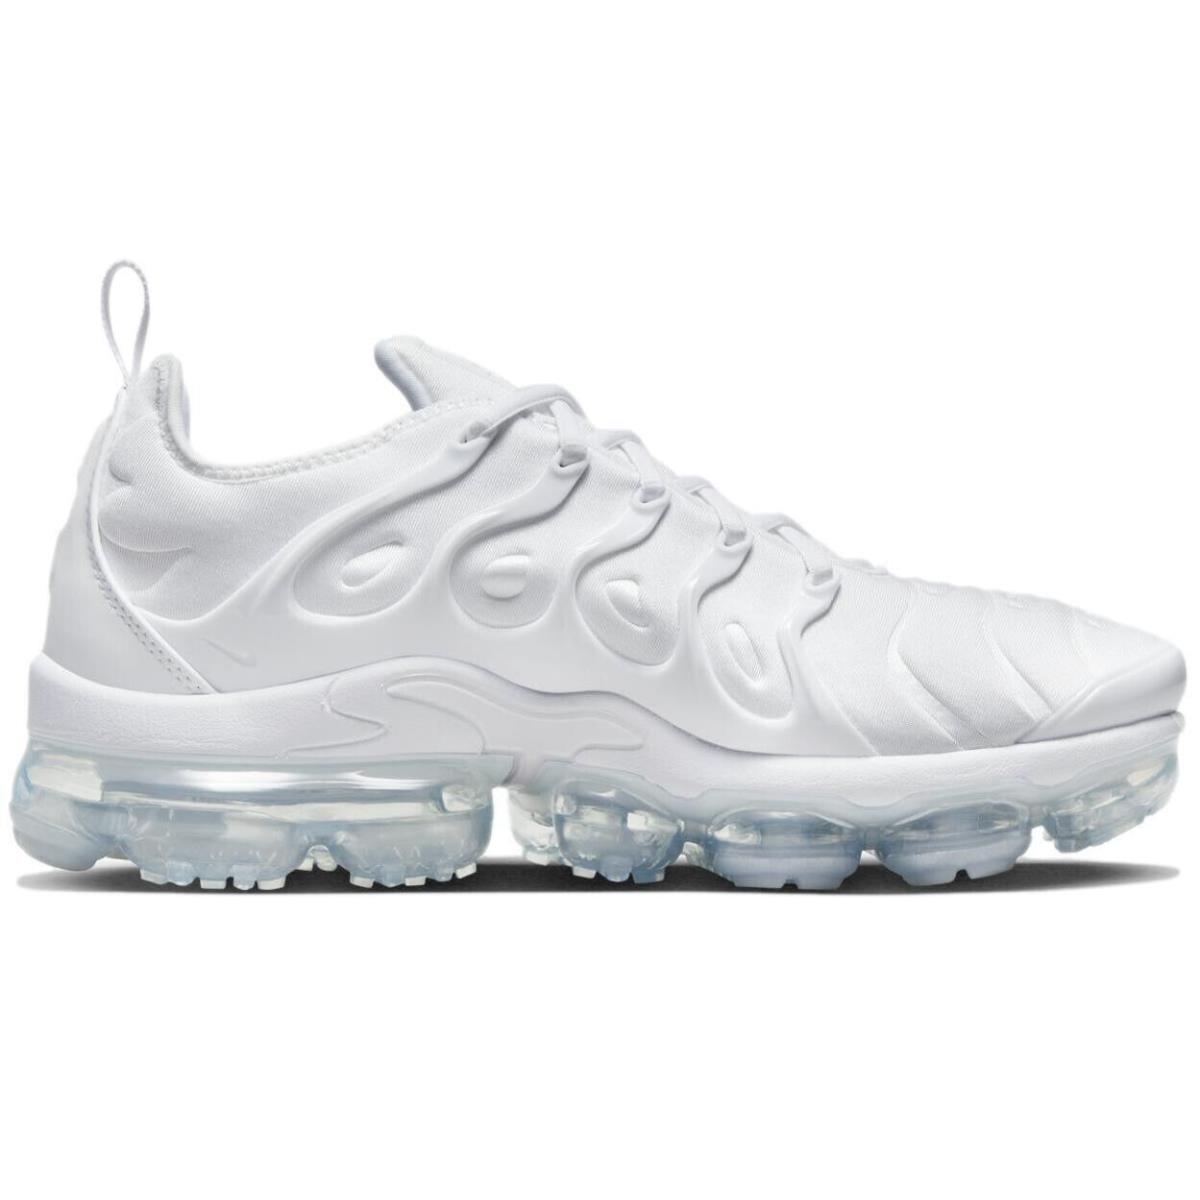 Nike Air Vapormax Plus `white Platinum` Men`s Shoes Sneakers - Size 9.5 - White